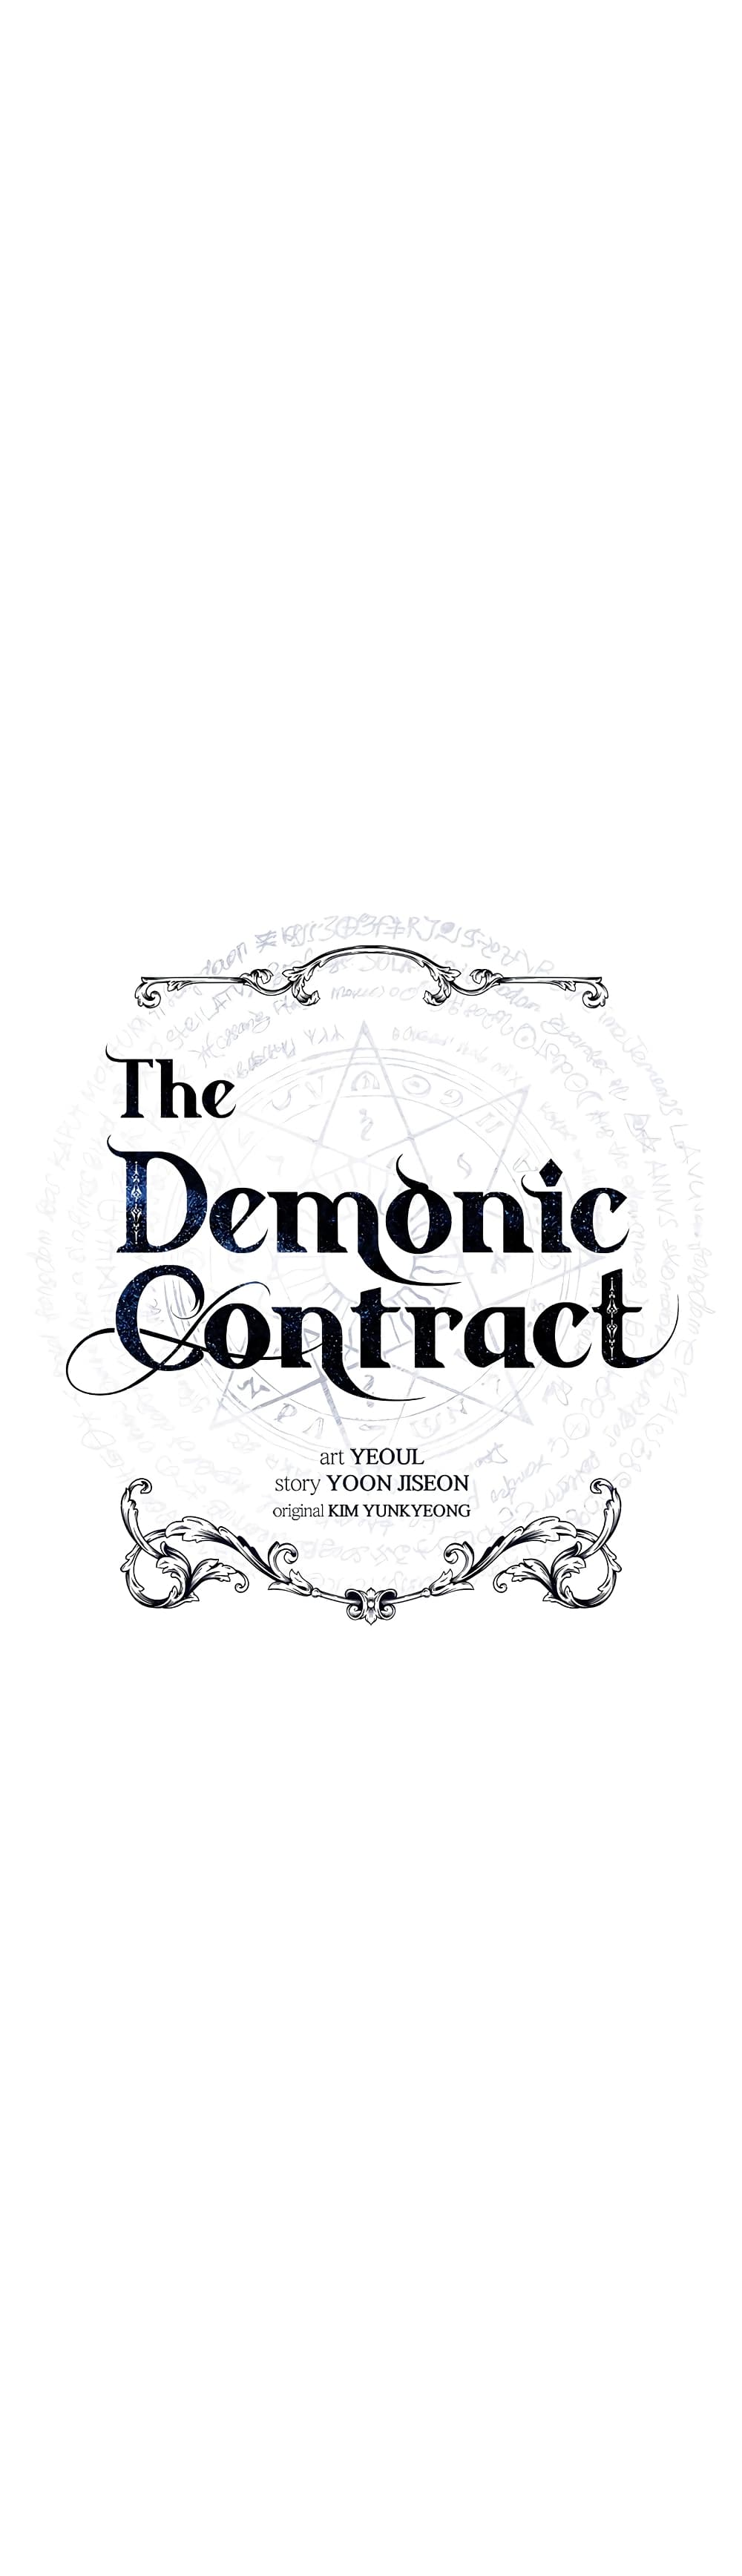 The Demonic Contract 52-52